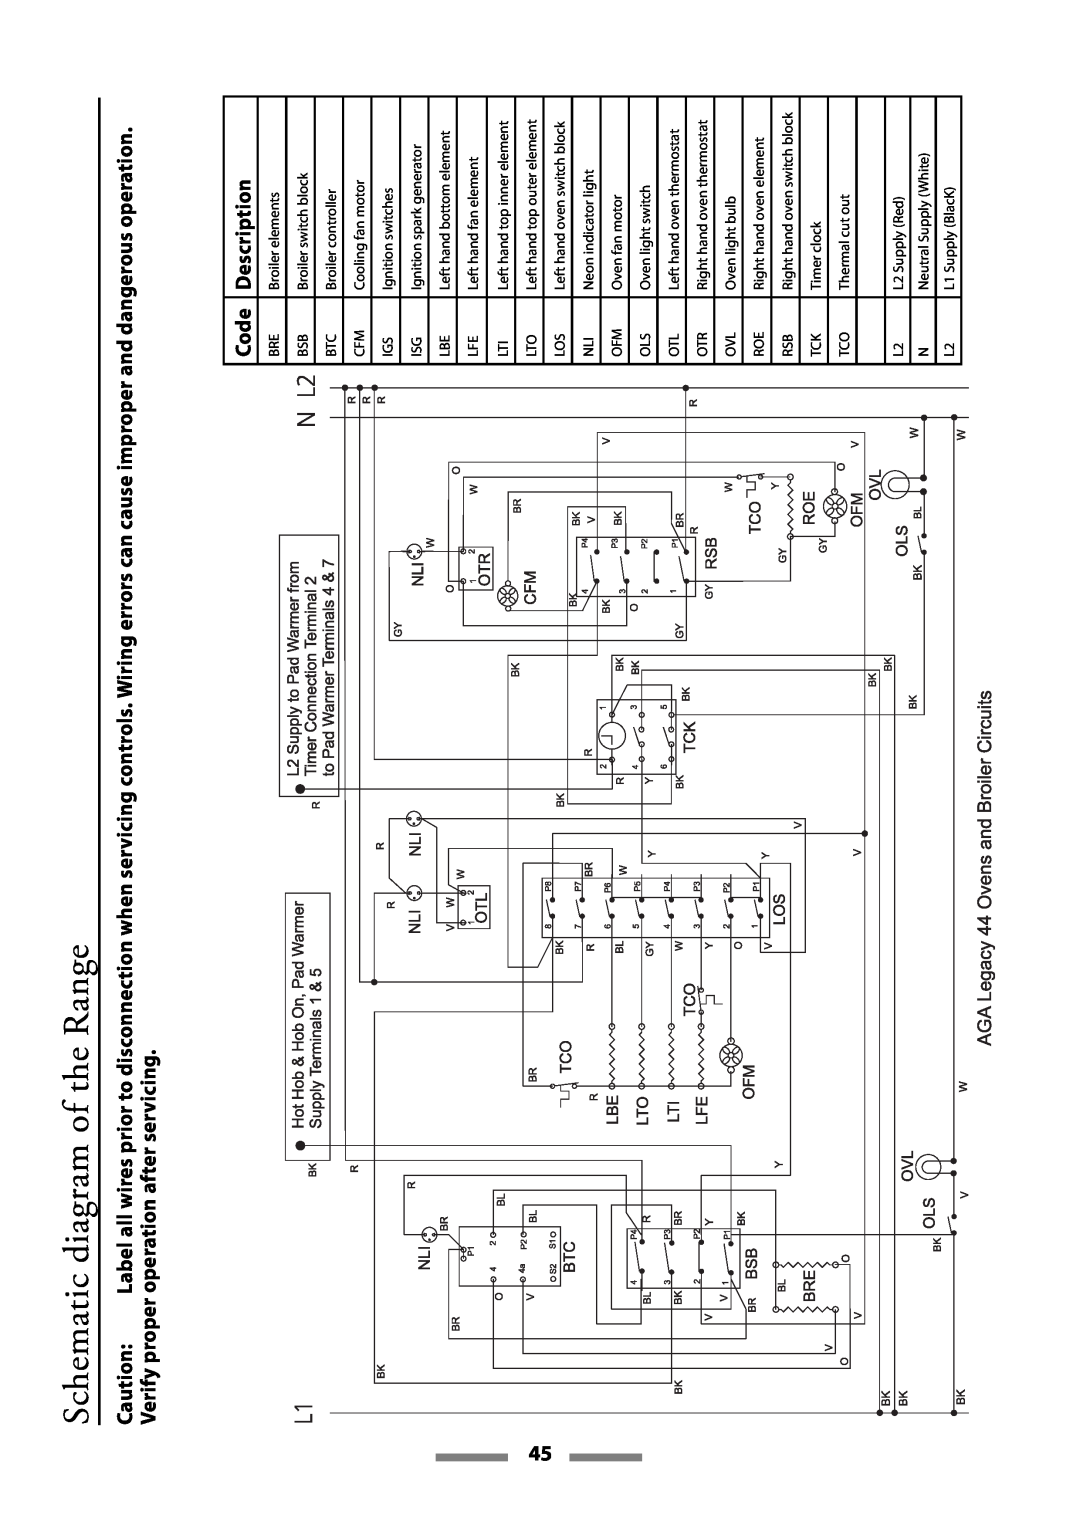 Aga Ranges Legacy 44 installation instructions Schematic diagram of the Range, Code, Description 